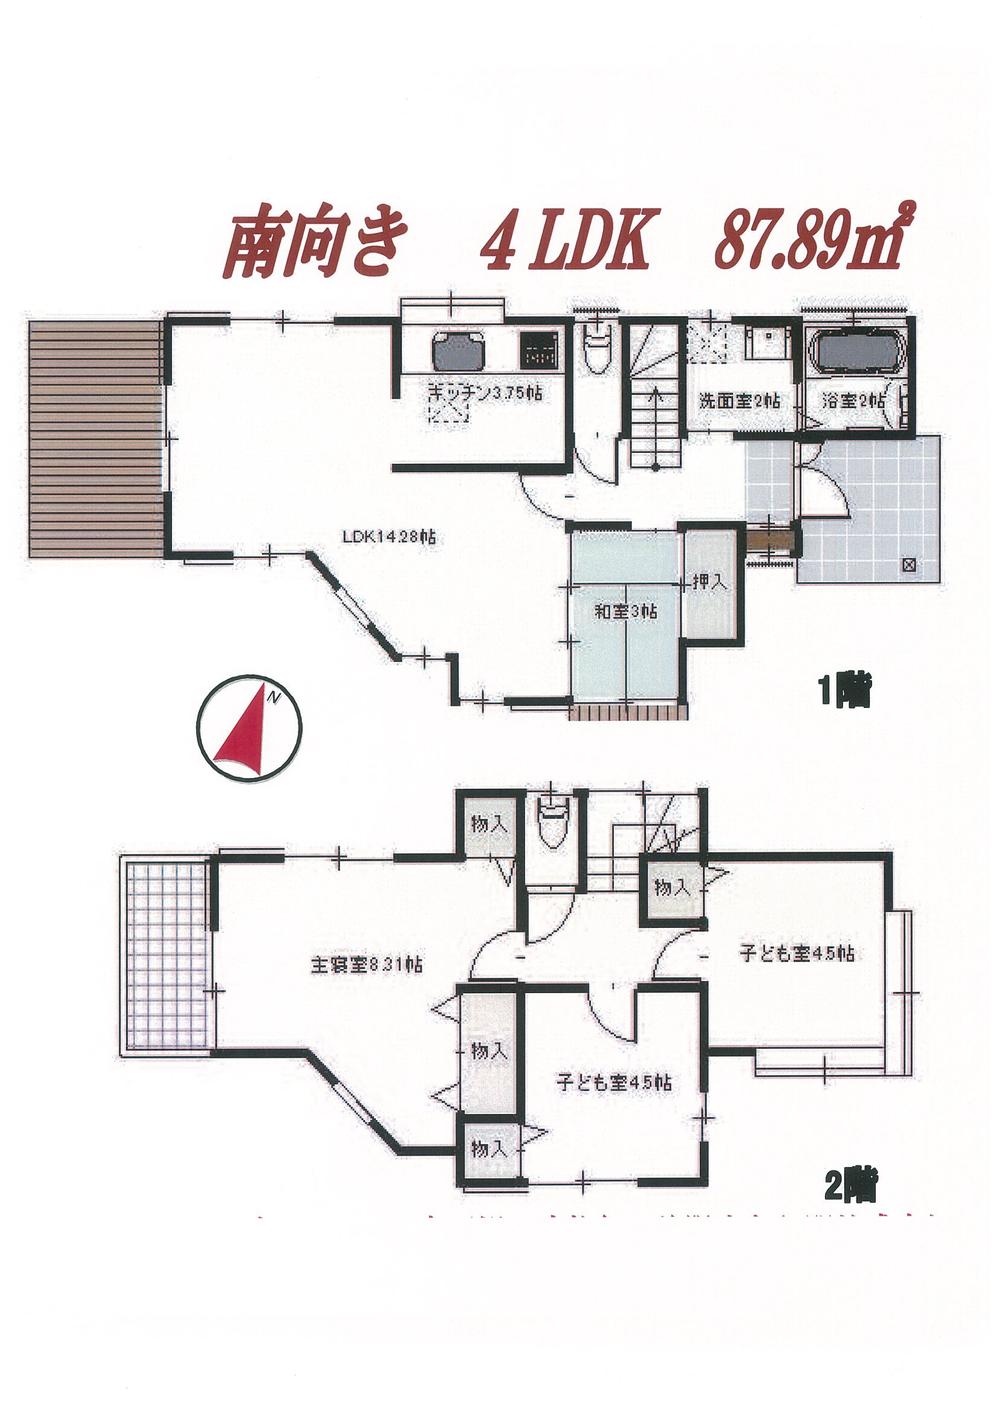 Floor plan. 32,800,000 yen, 4LDK, Land area 191.35 sq m , Building area 107.78 sq m